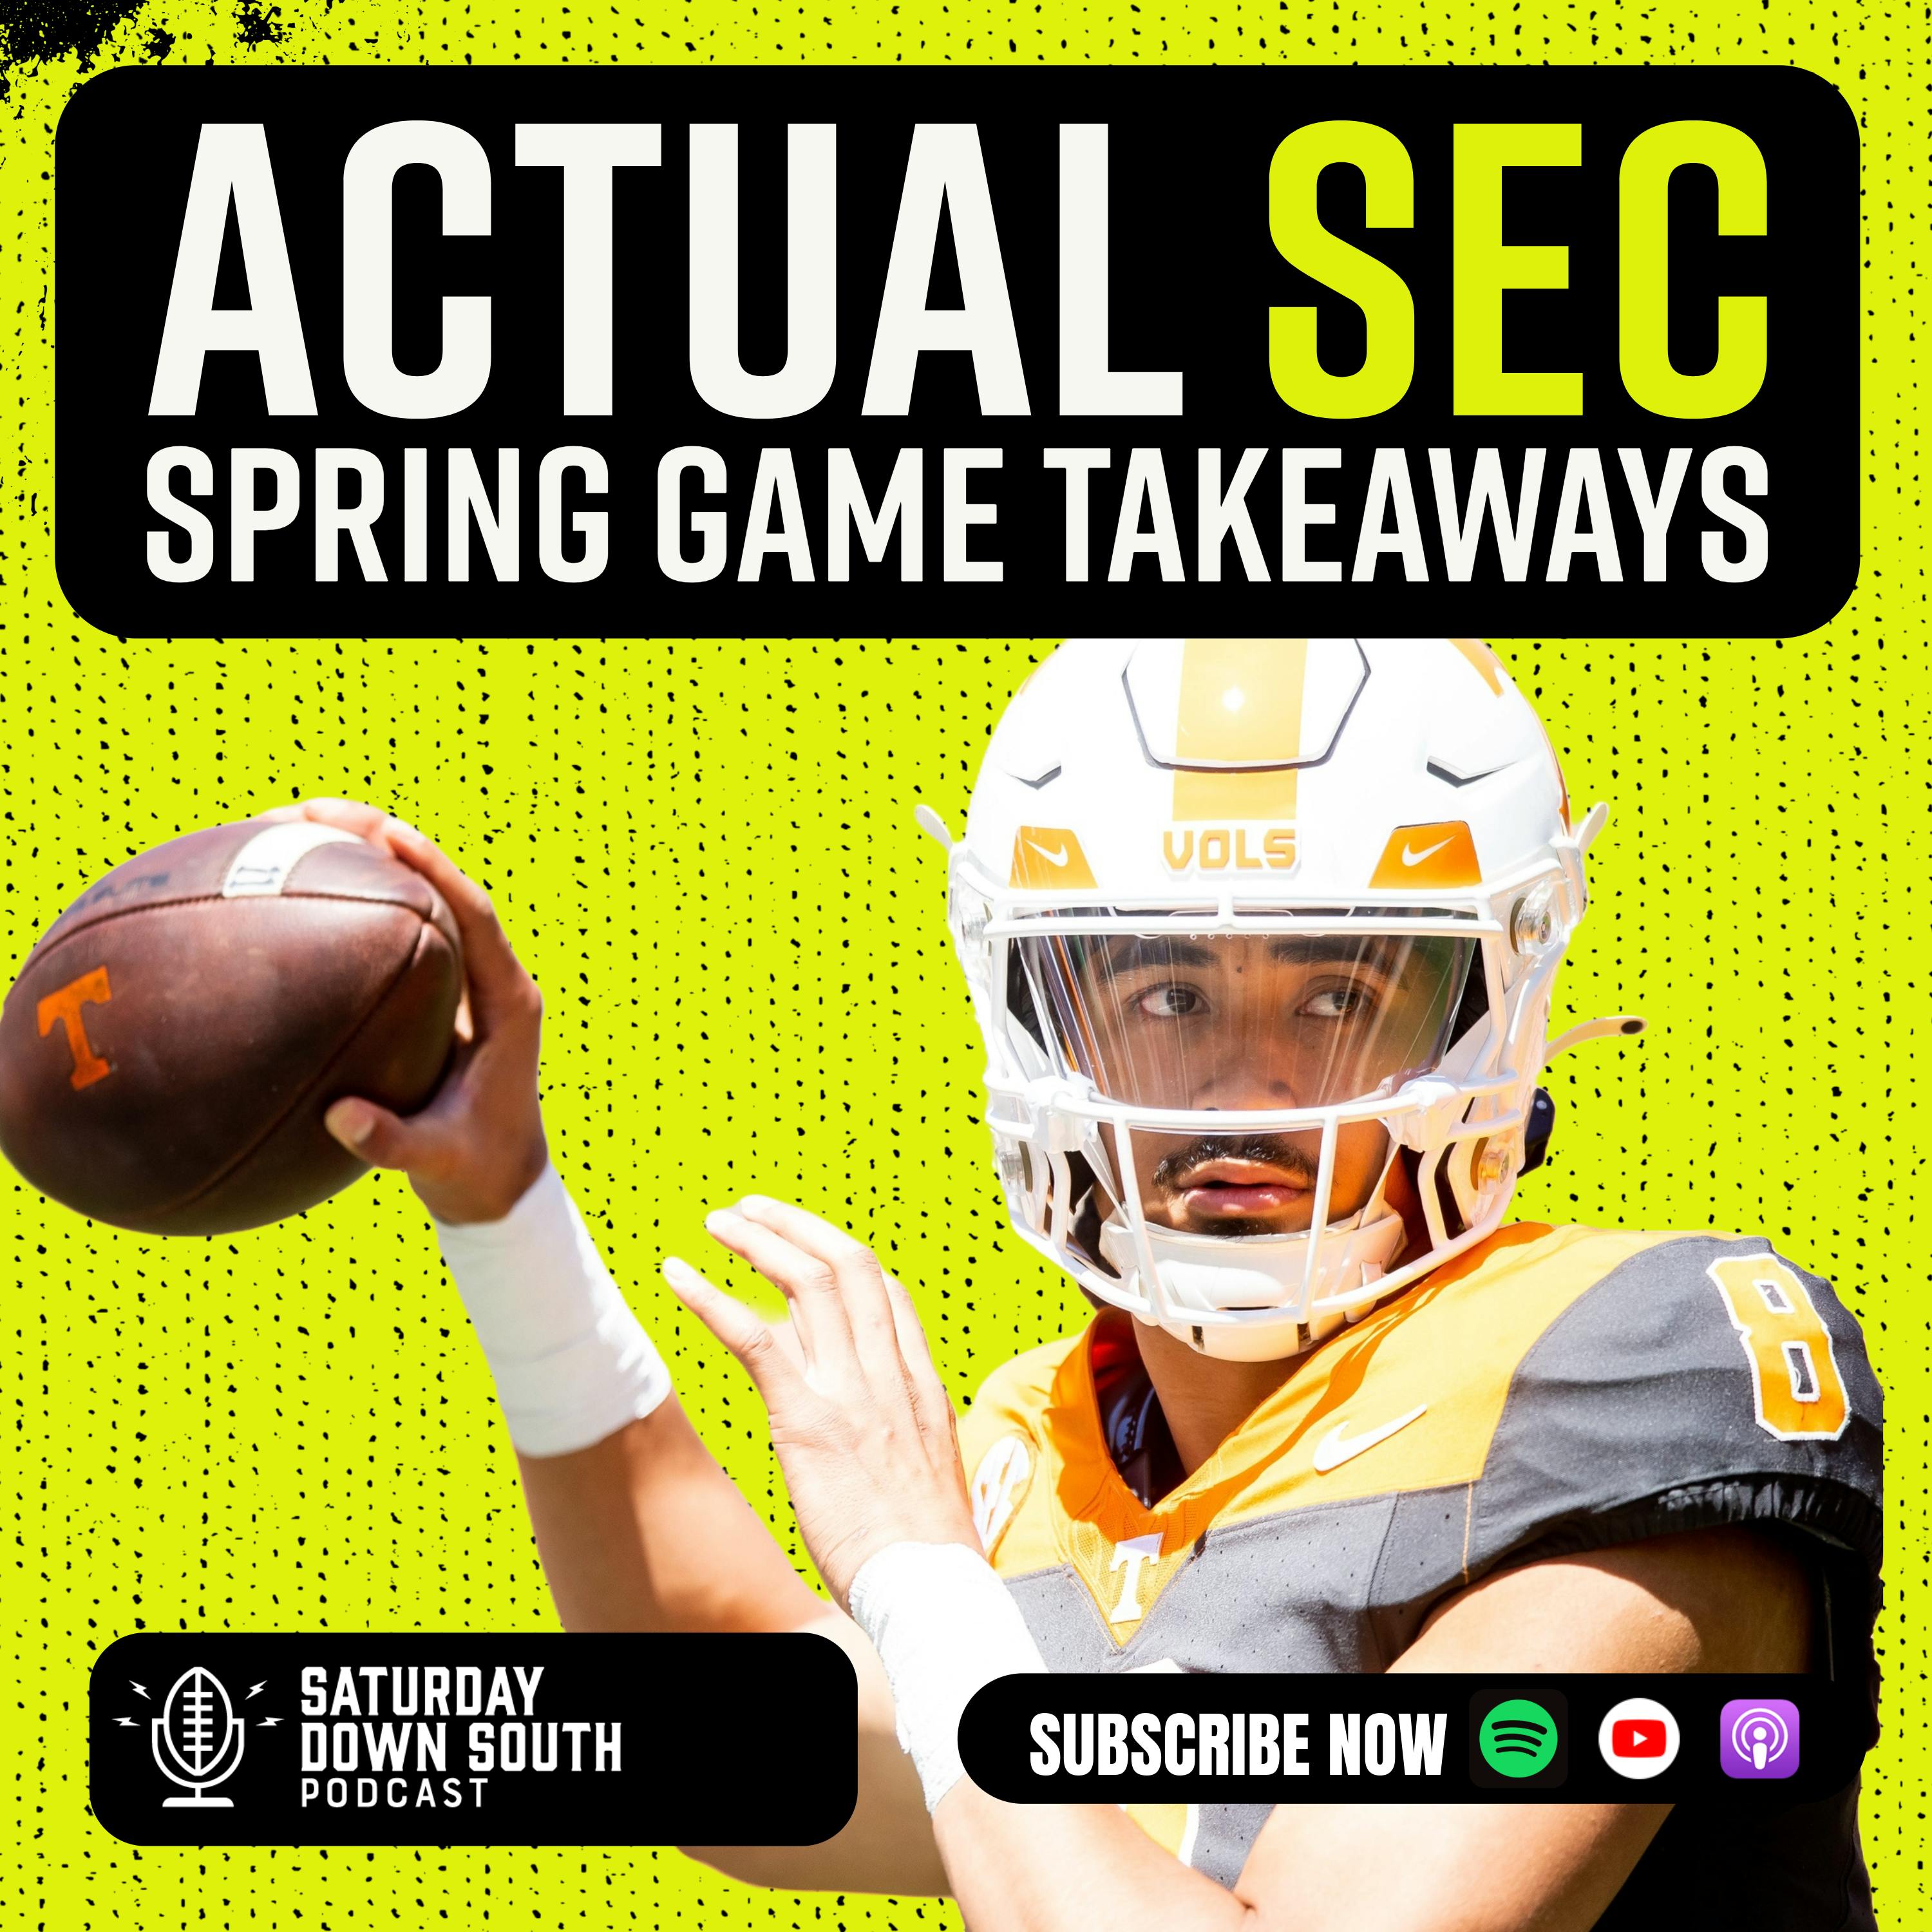 Actual SEC spring game takeaways, Josh Pate talks portal chaos, storm-chasing team & Year 2 Hugh Freeze